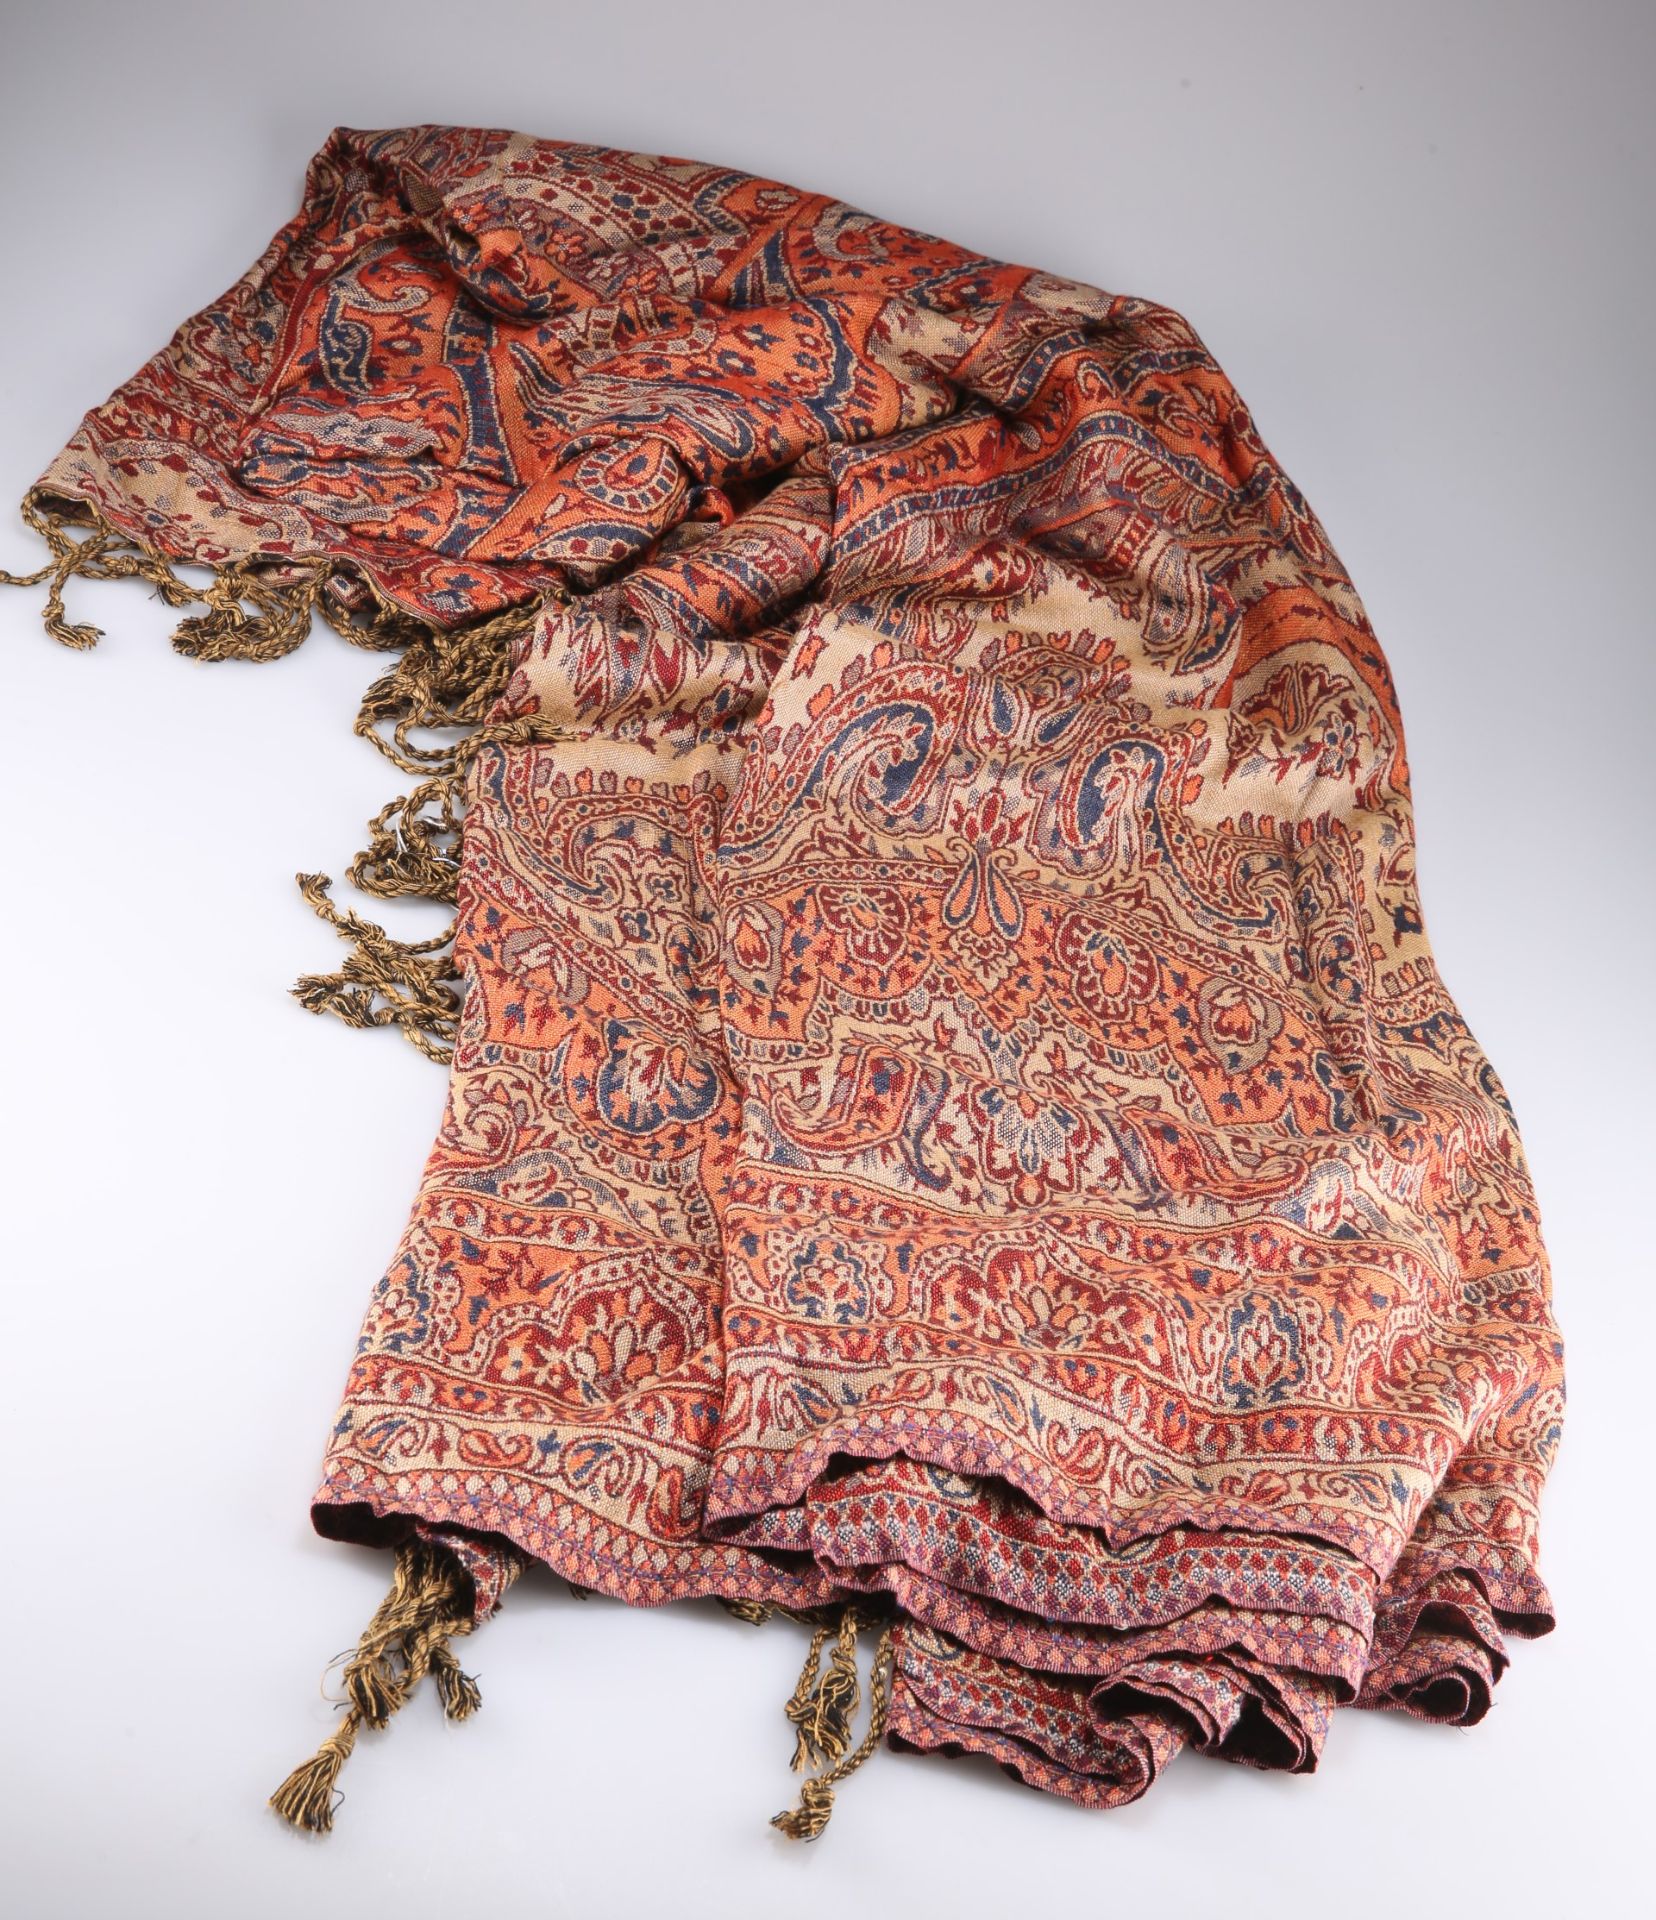 A large Paisley shawl